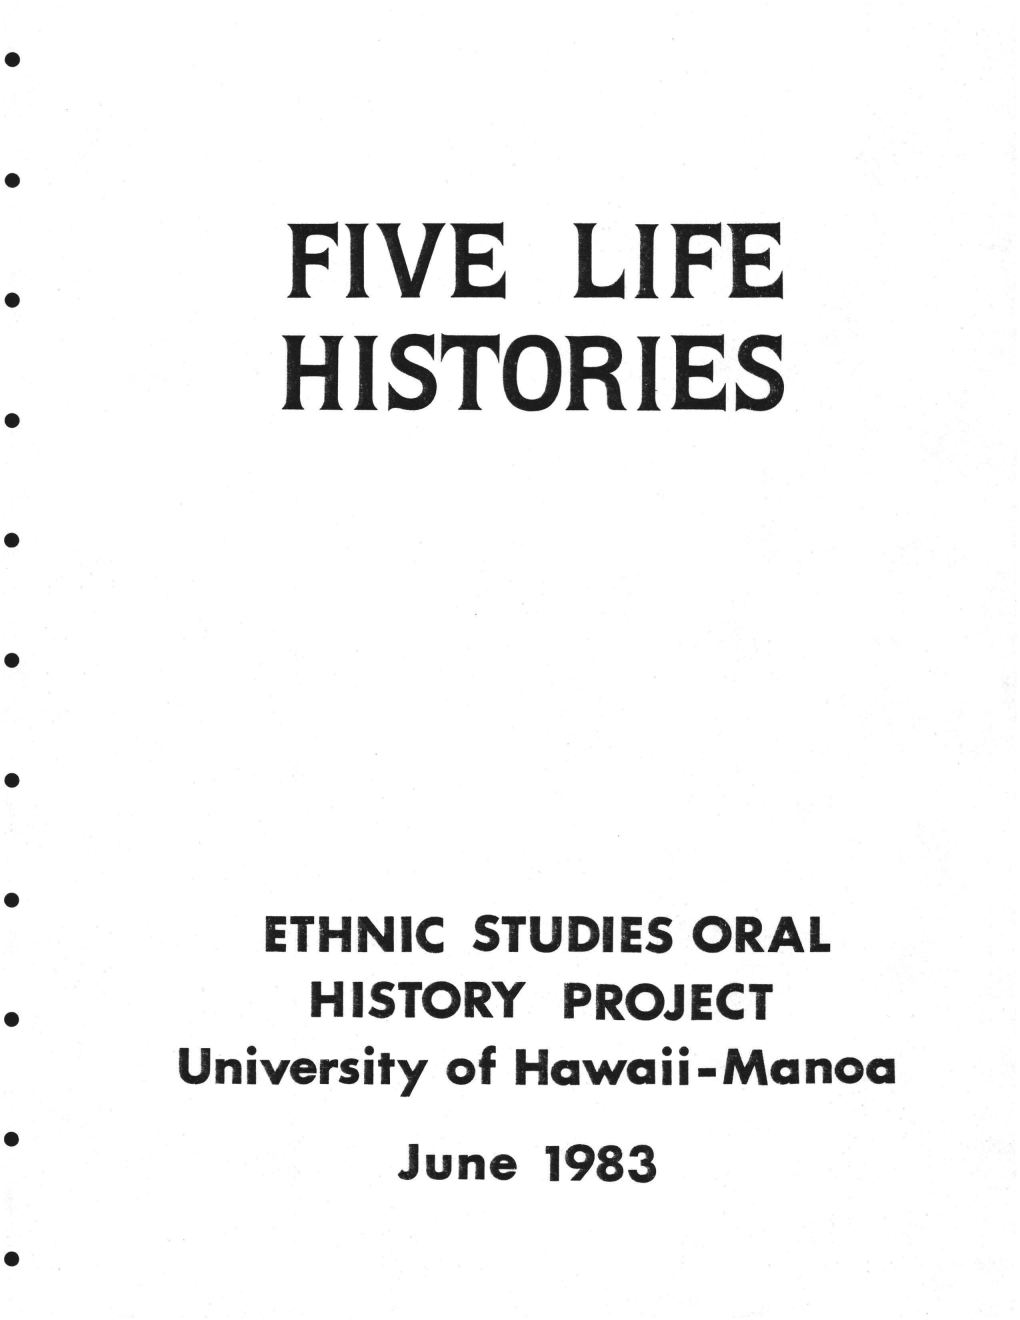 Five Life Histories Interviewees (Clockwise from Top): Charlie Santos, Ernest Malterre, Raku Morimoto, Edith Yonenaka, Yuzuru Morita